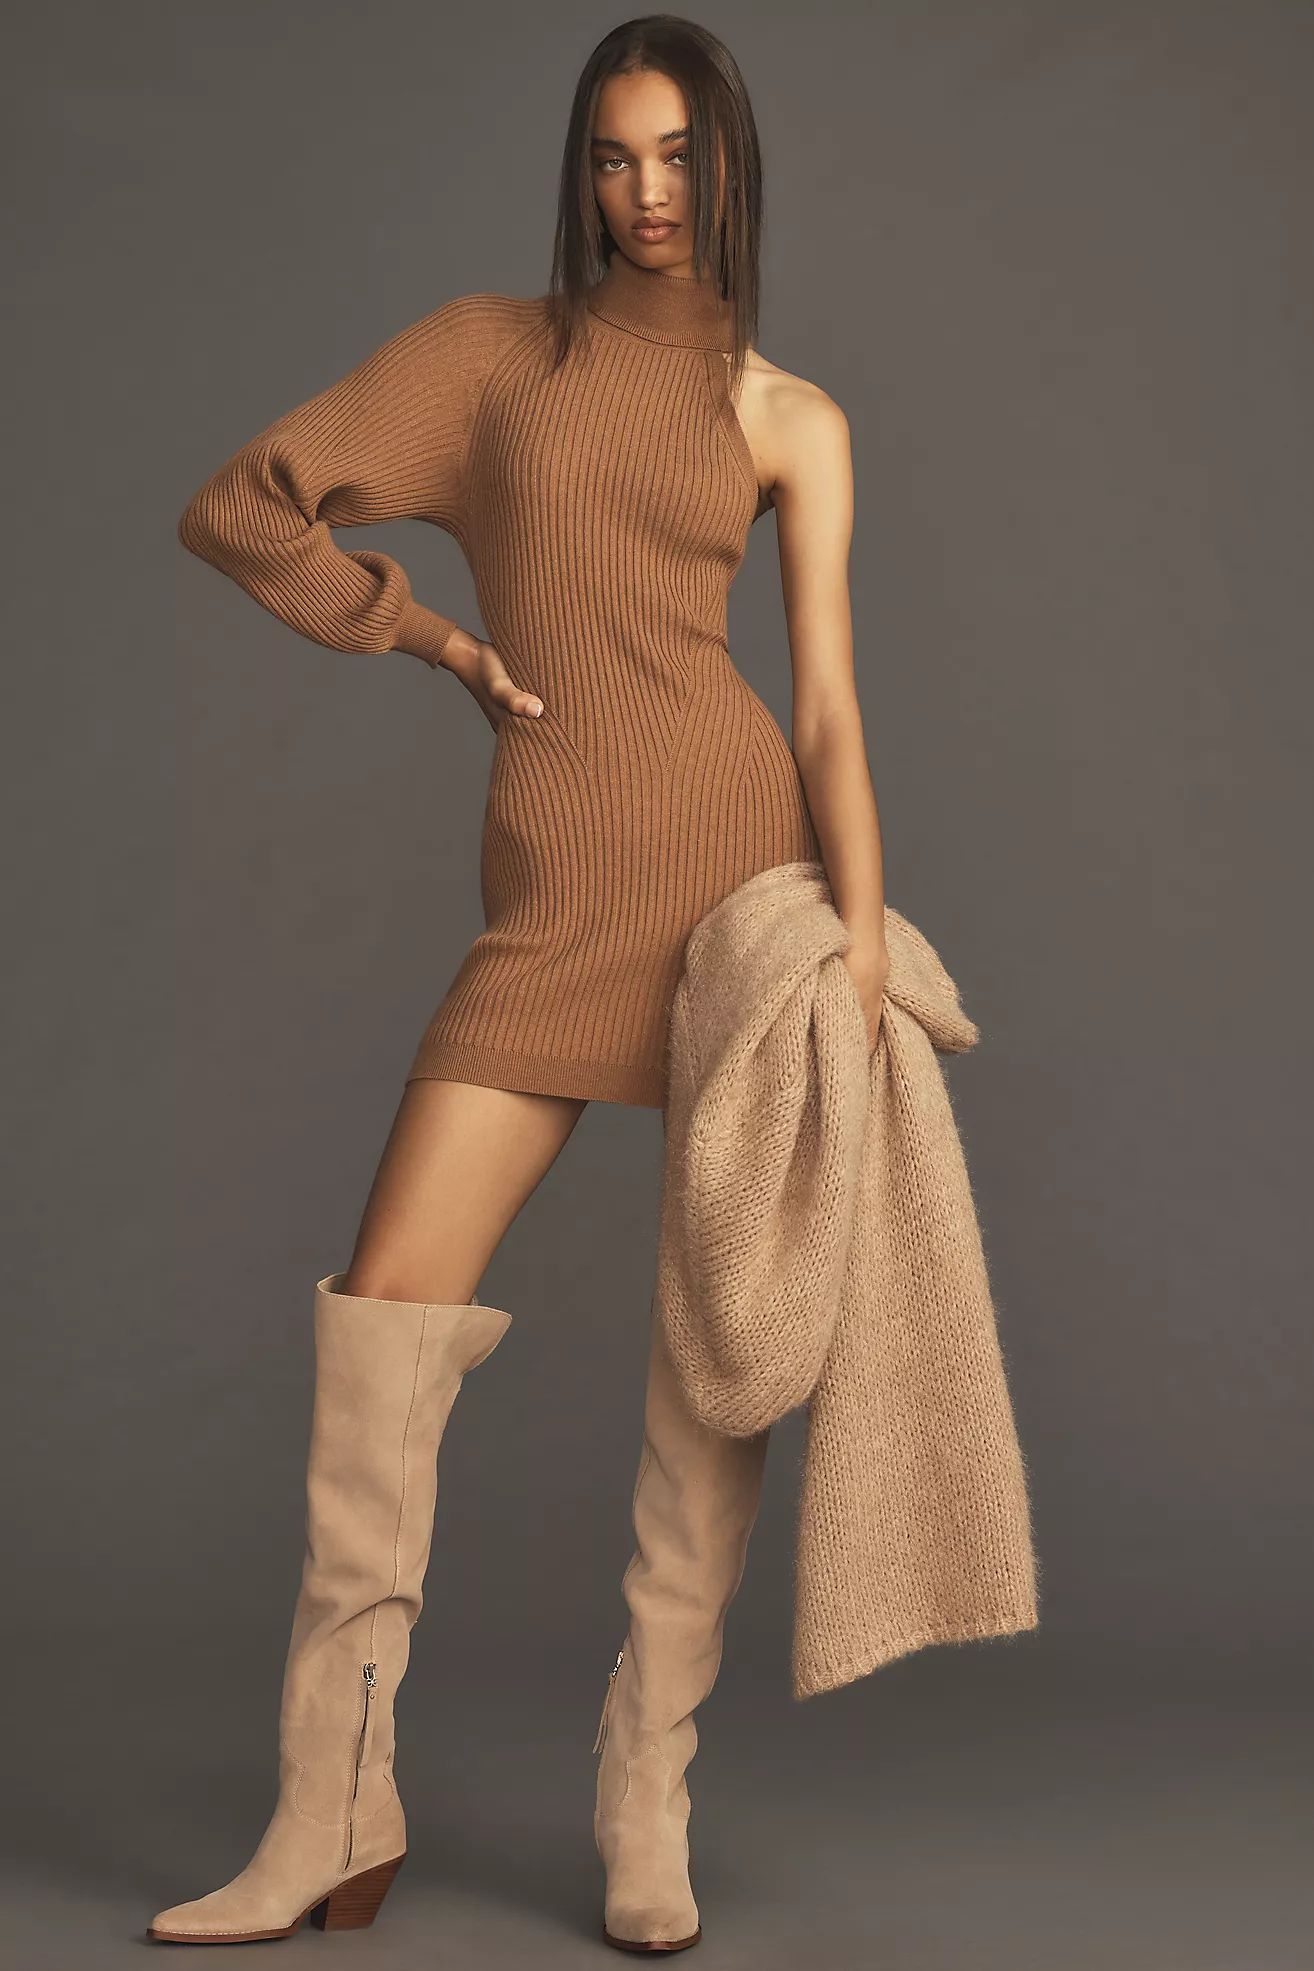 By Anthropologie Asymmetrical Slim Sweater Mini Dress | Anthropologie (US)